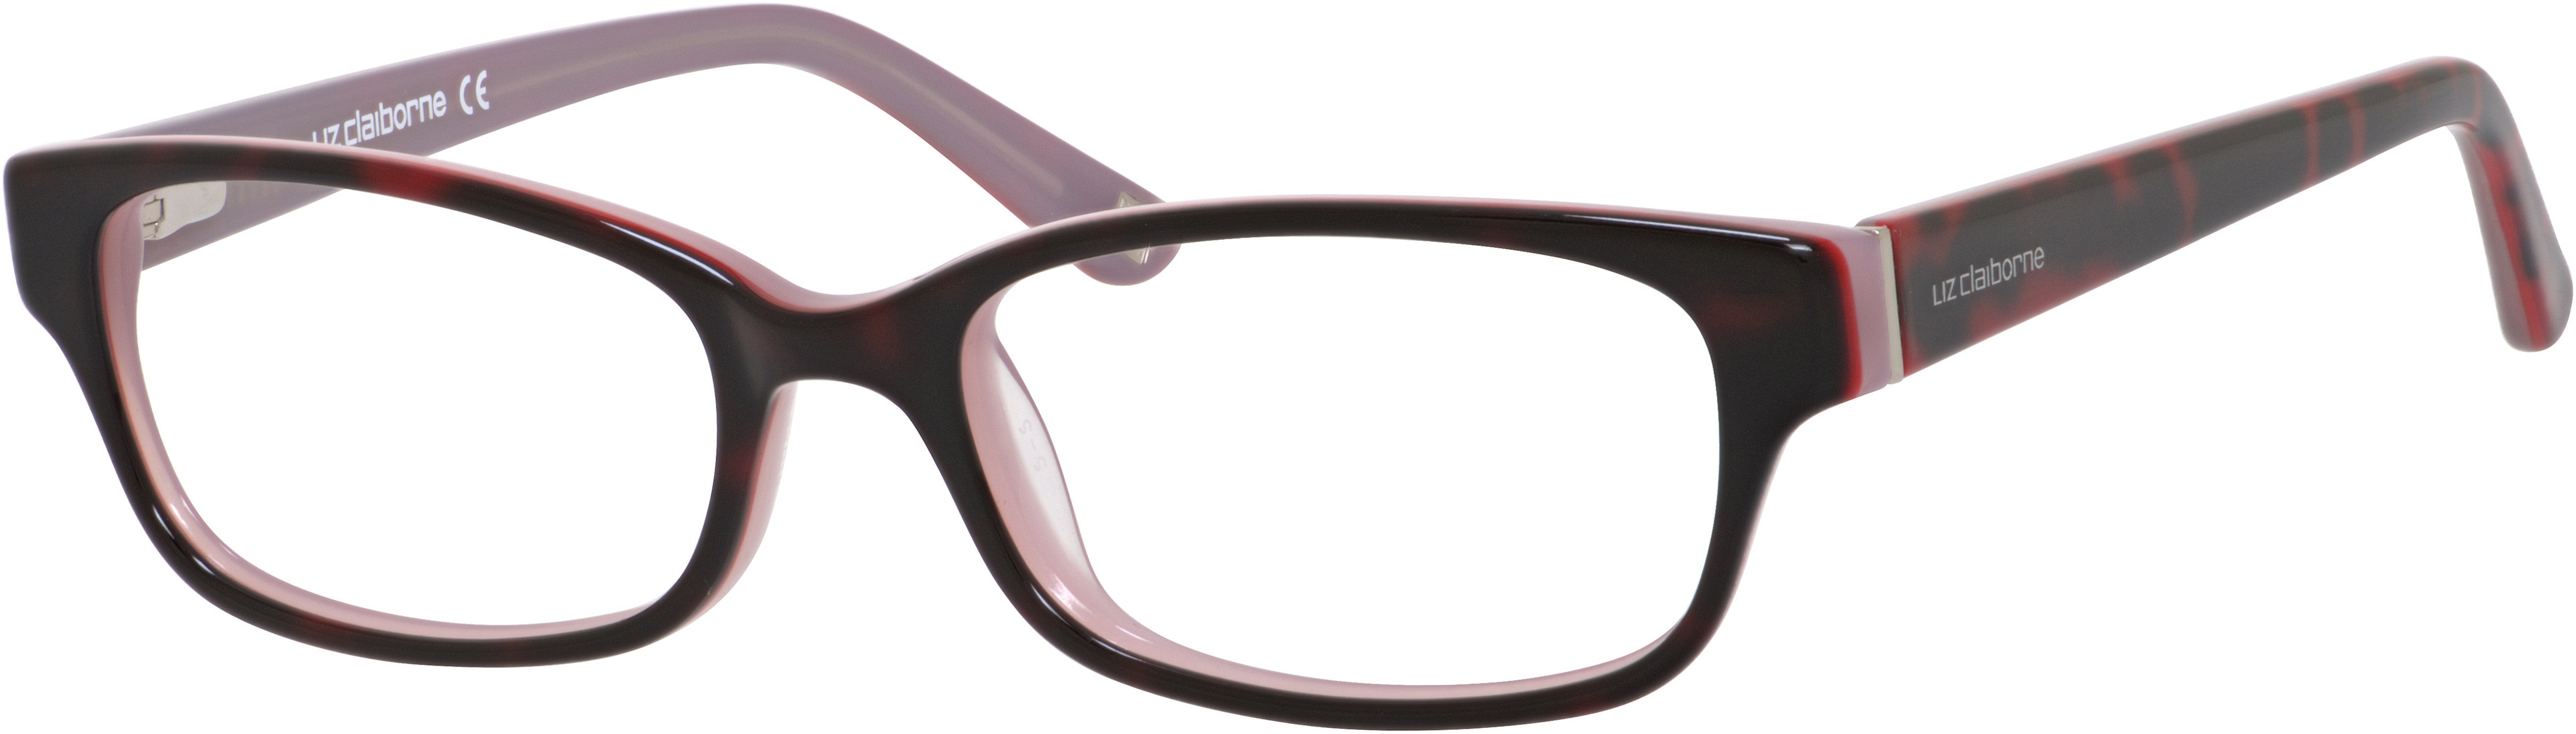  Liz Claiborne 429 Rectangular Eyeglasses 0JGH-0JGH  Havana Pink (00 Demo Lens)